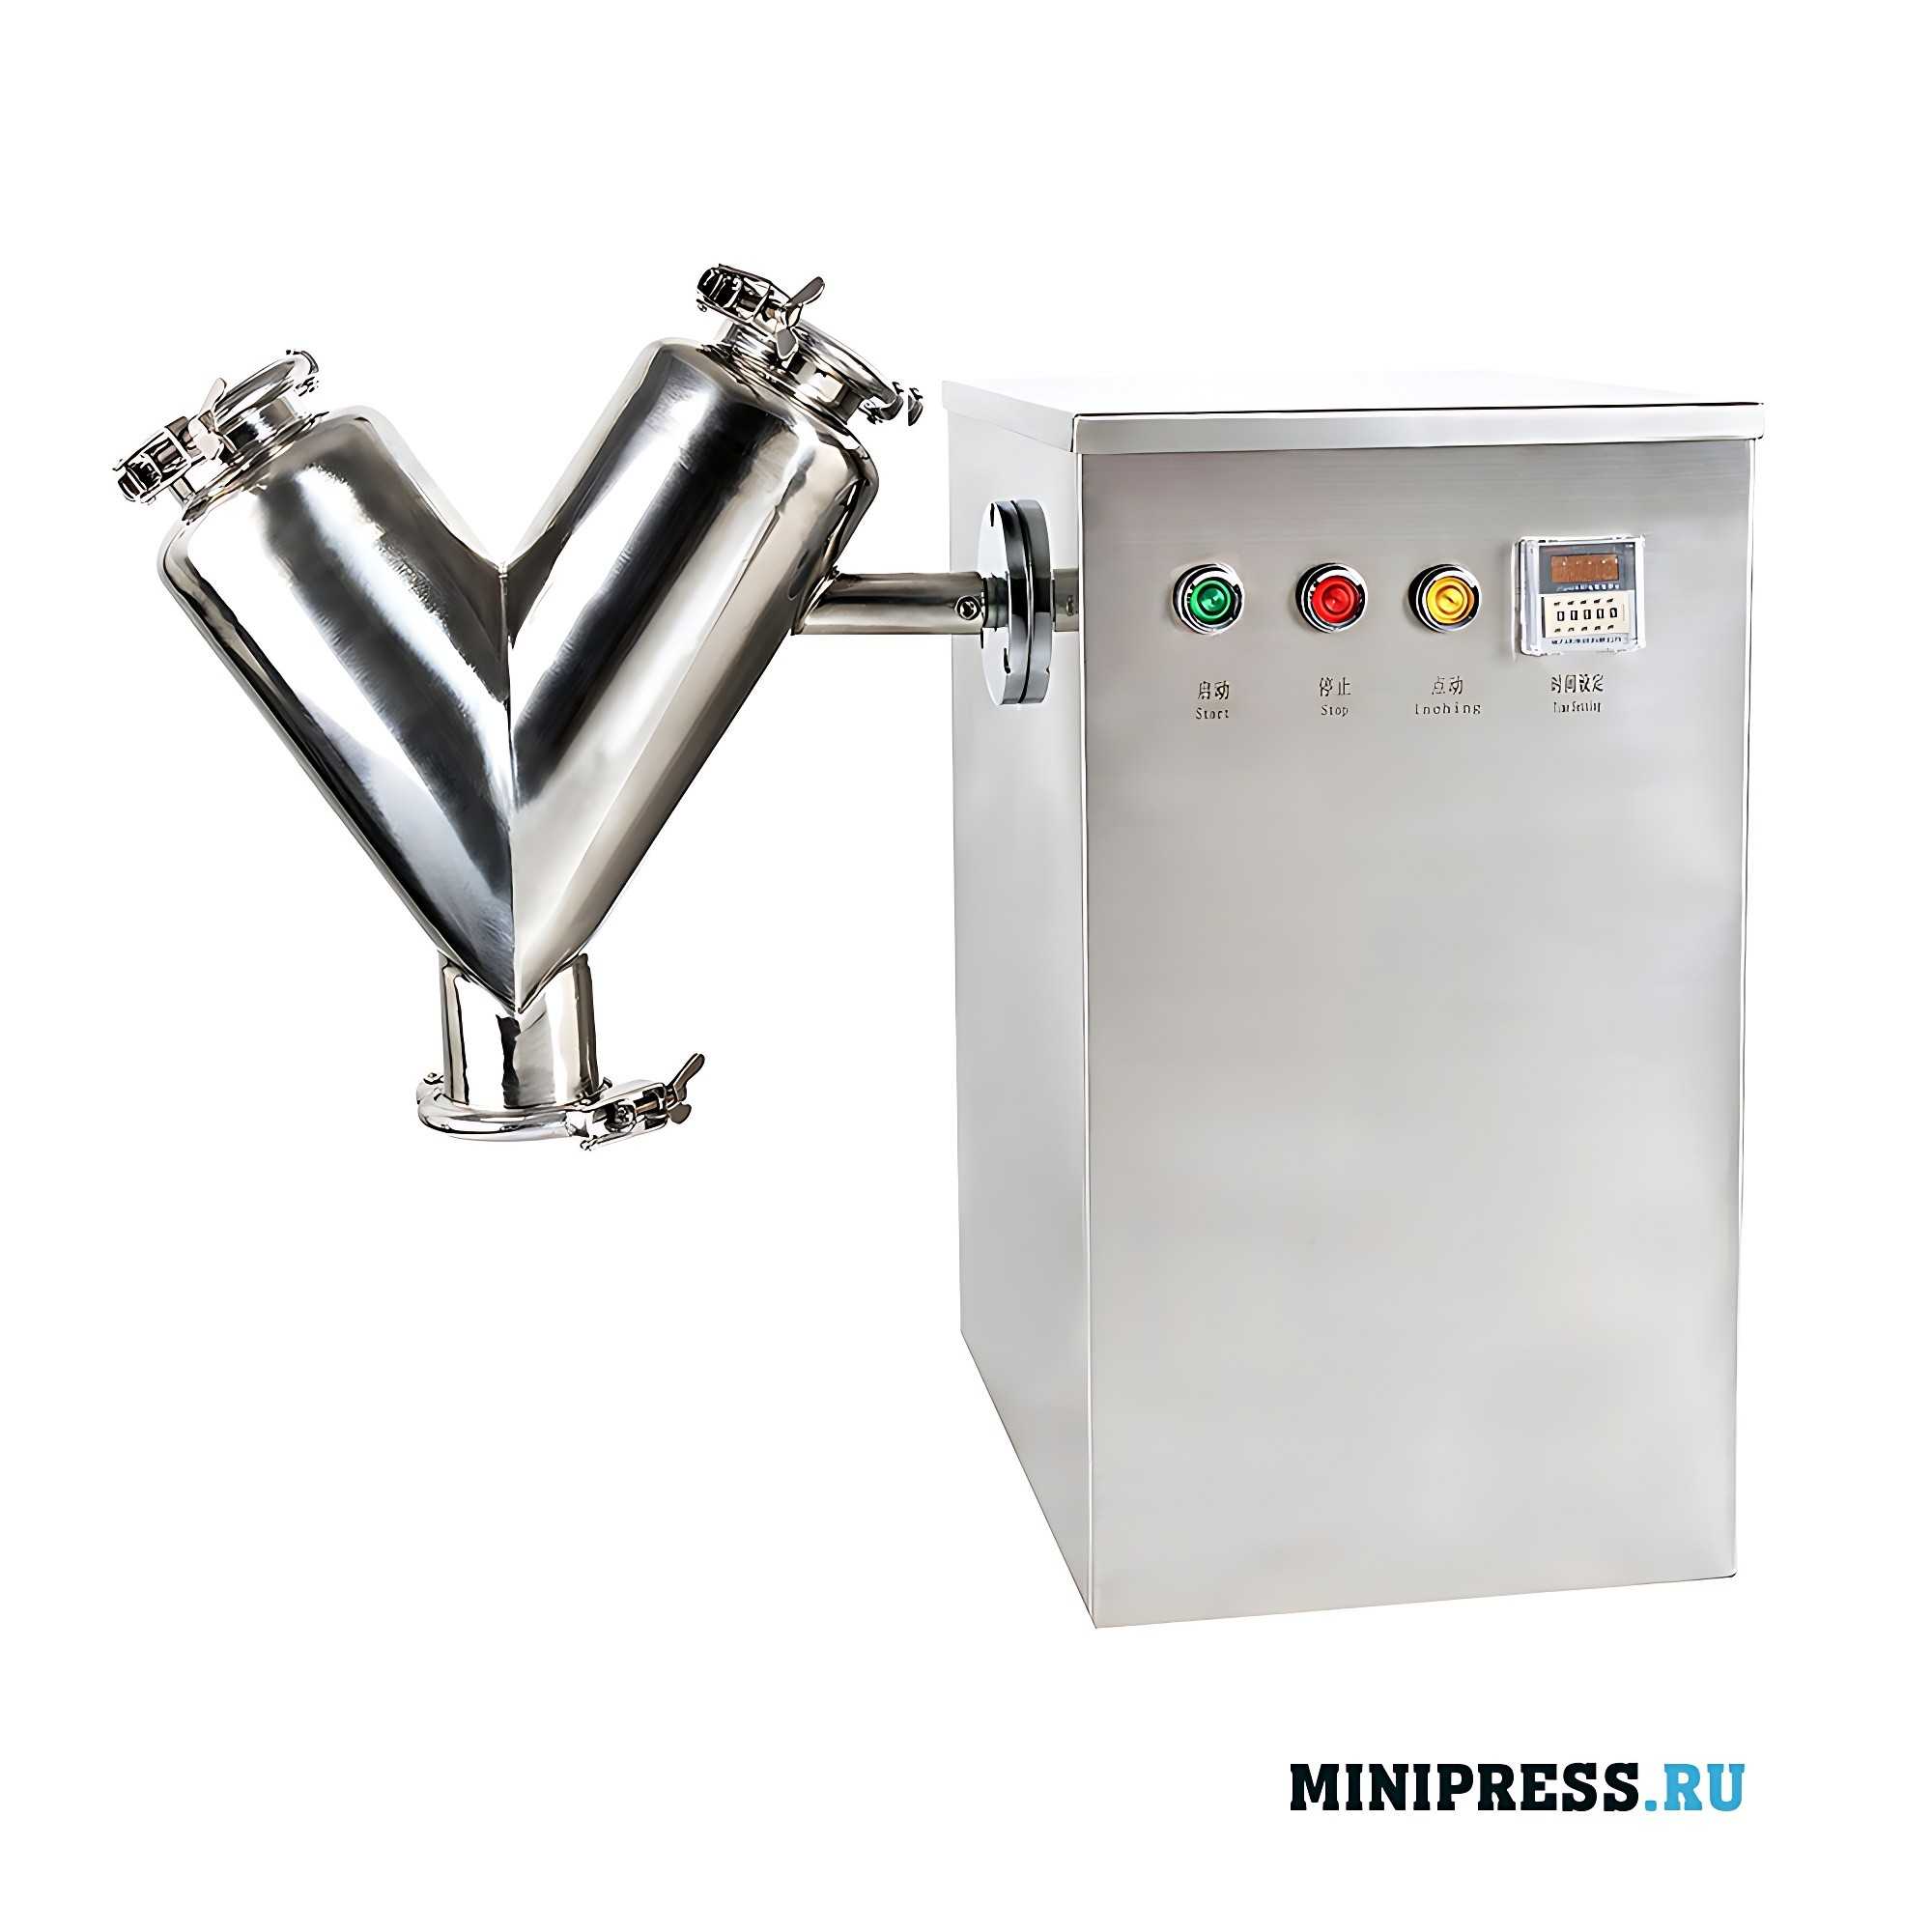 V-mixer for powders VM-20